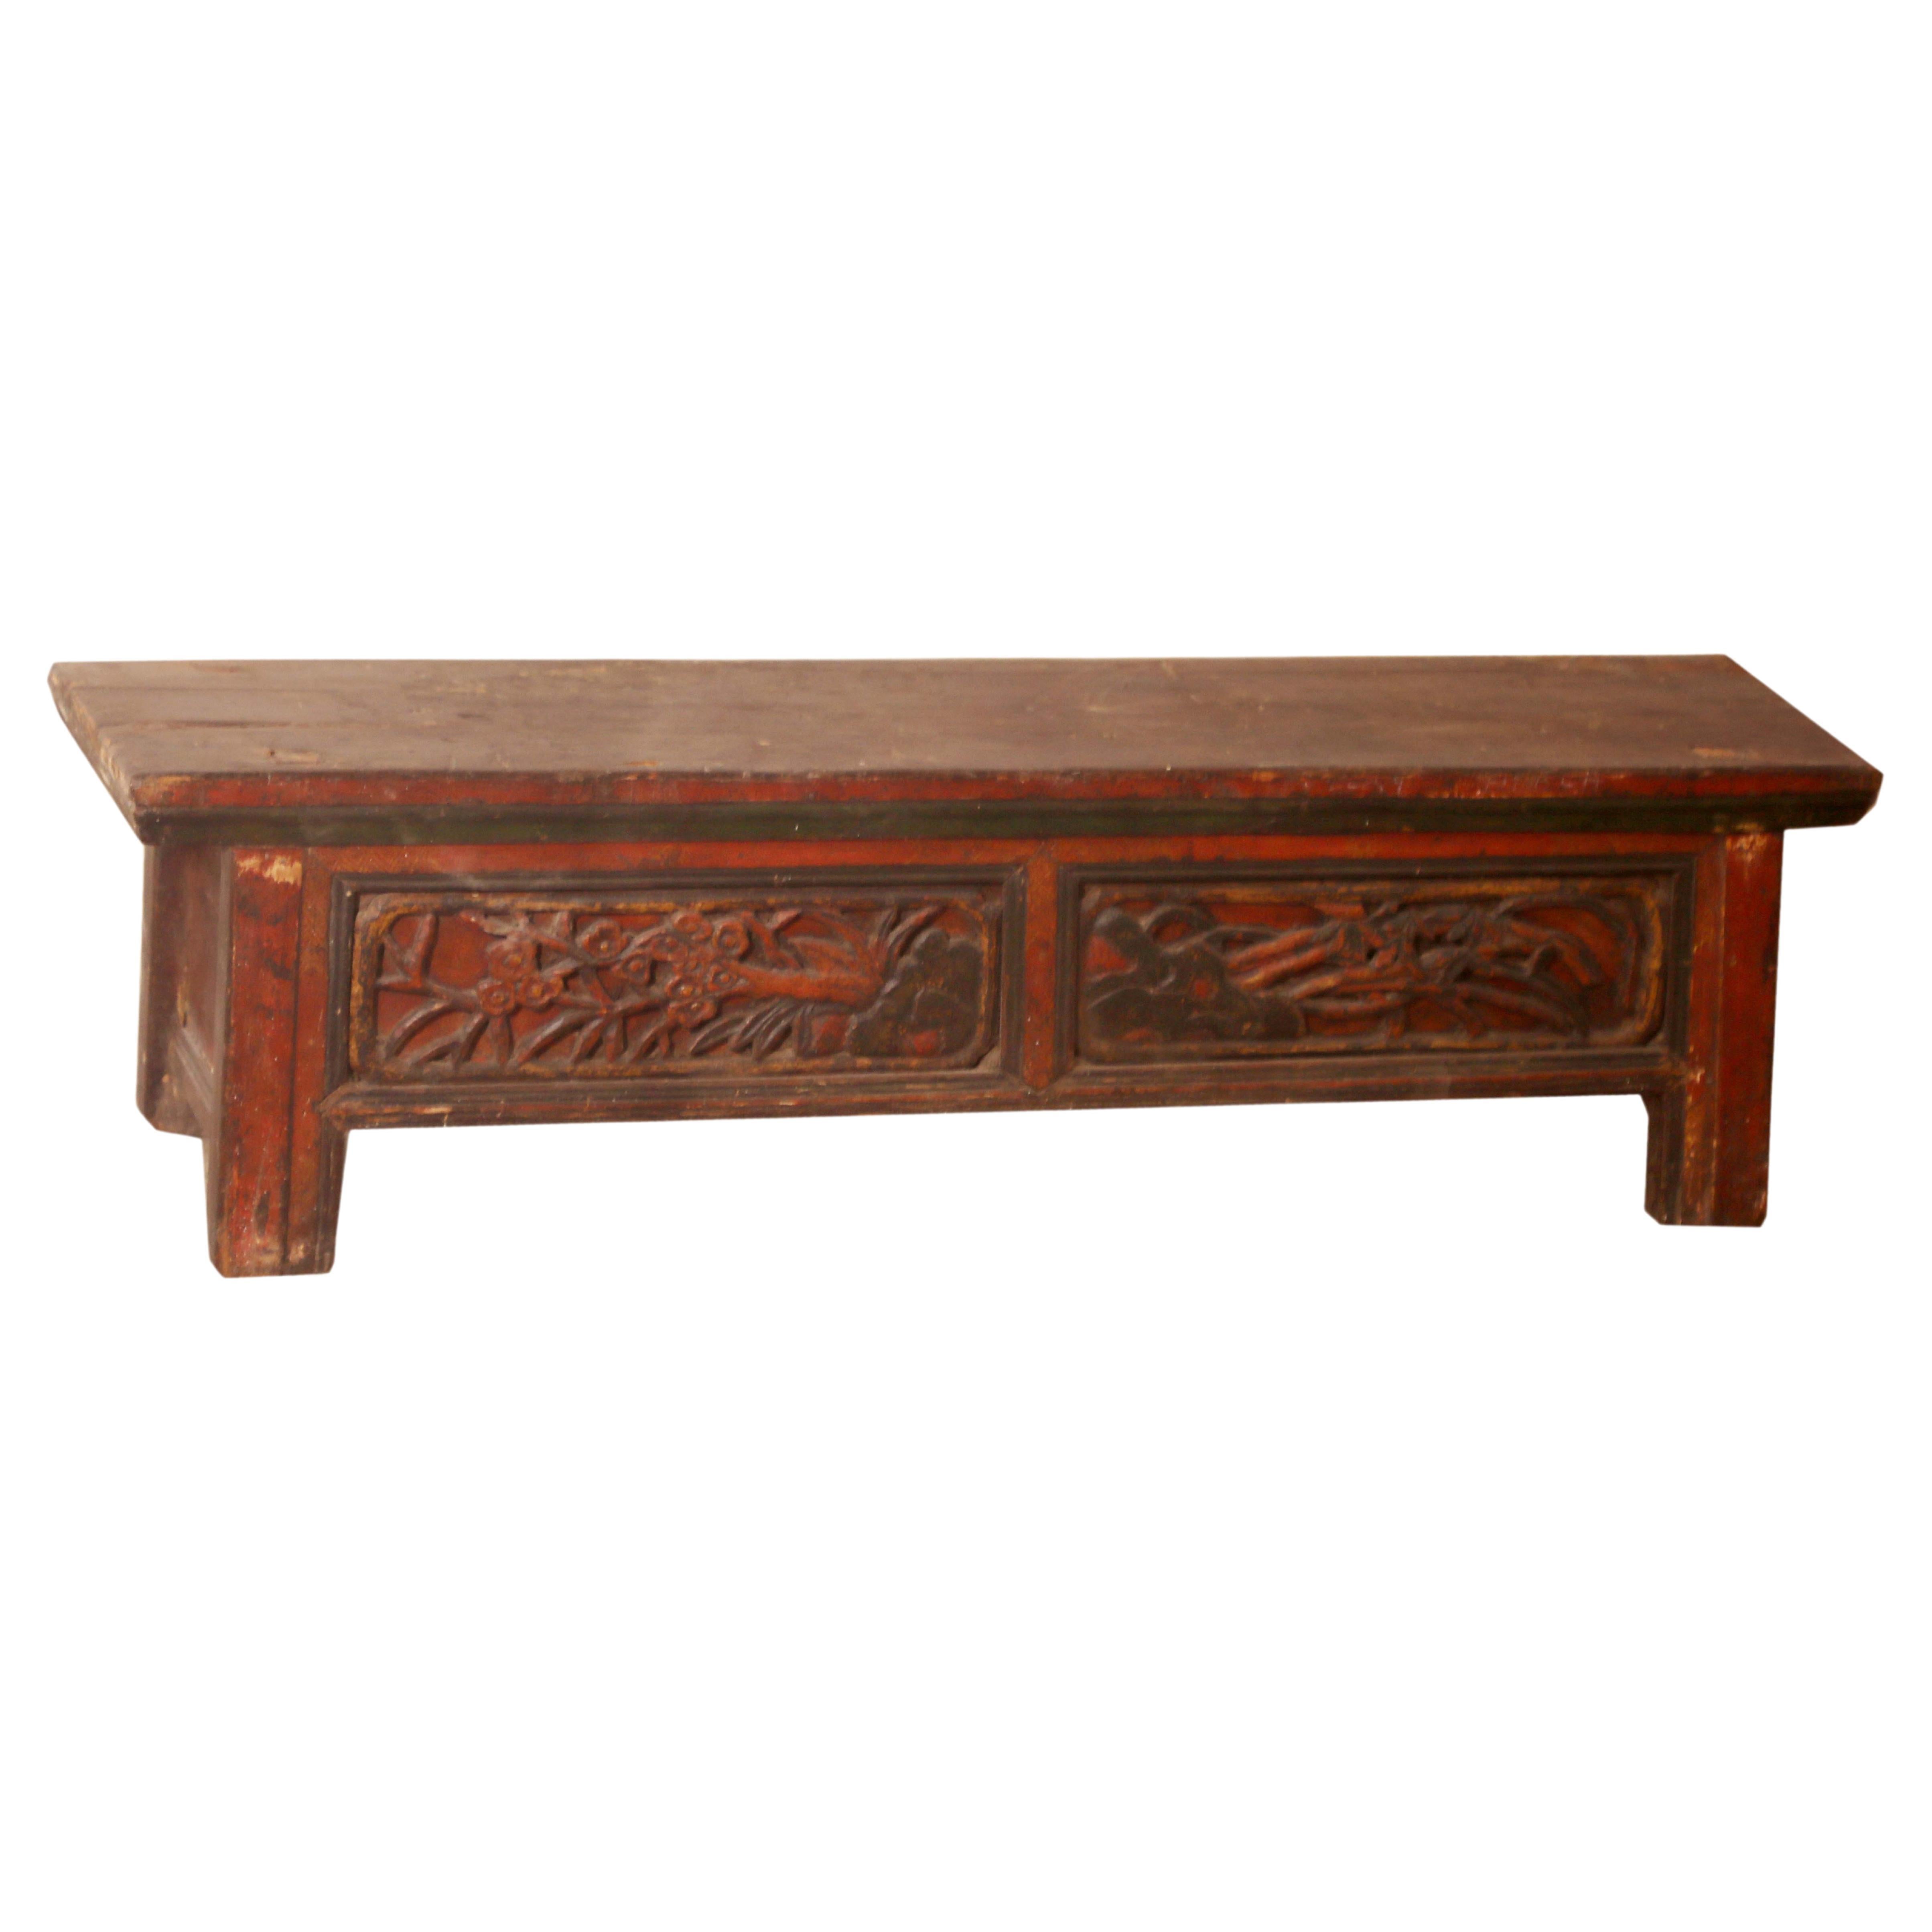 19th century Tibetan bench in hand painted wood